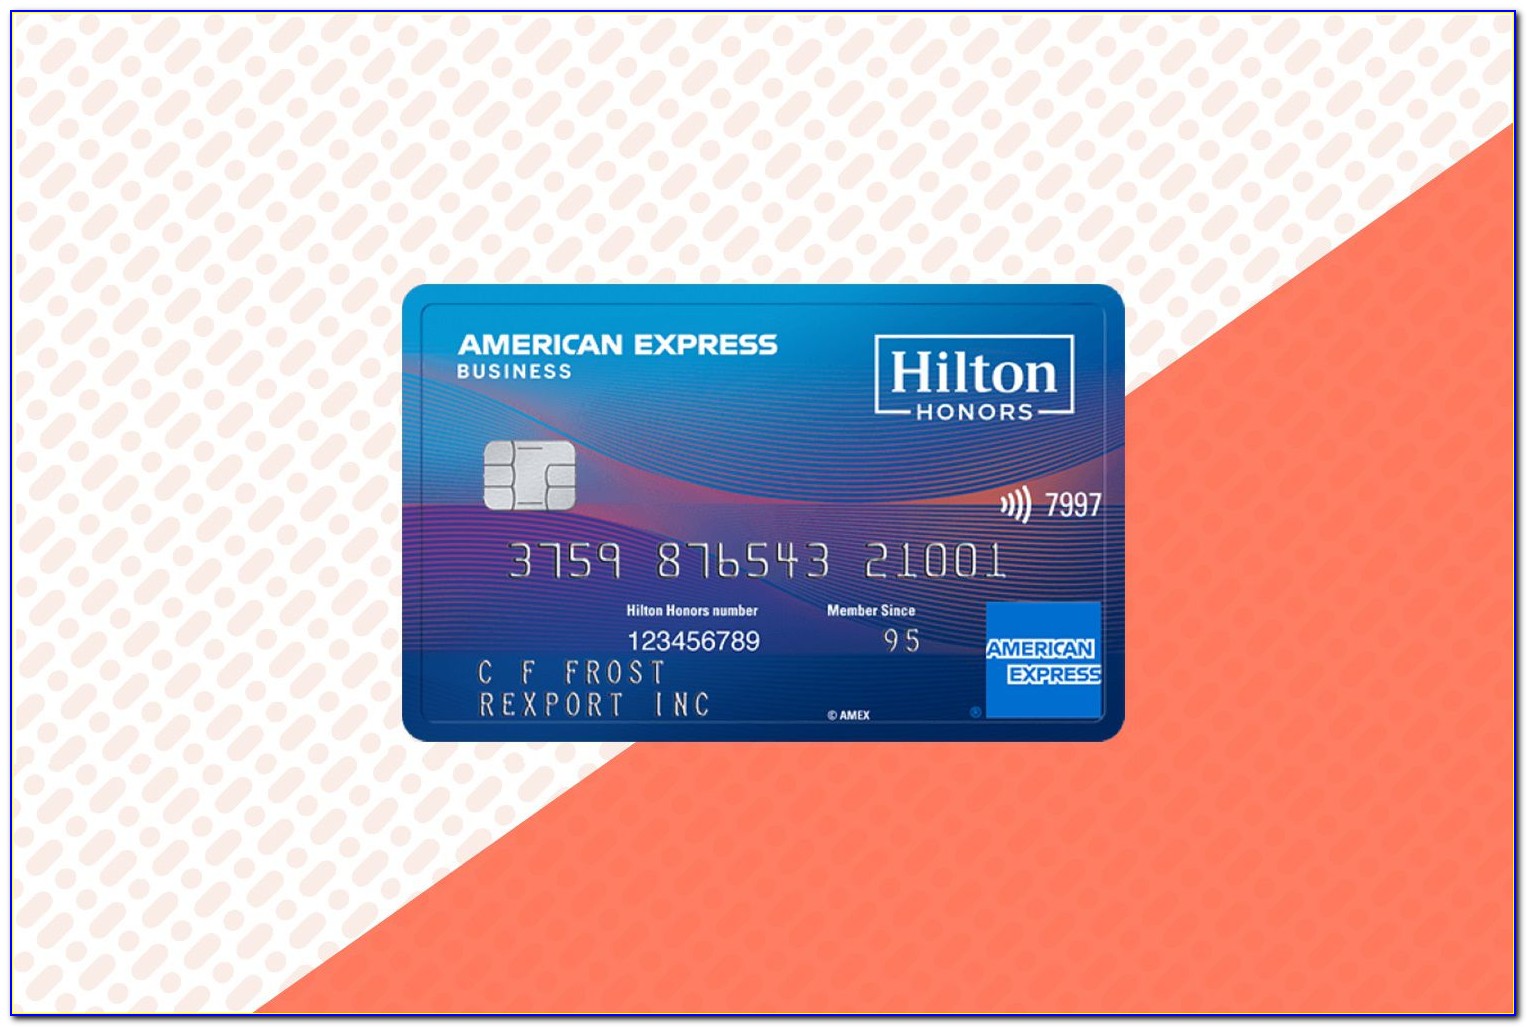 Hilton Business American Express Card